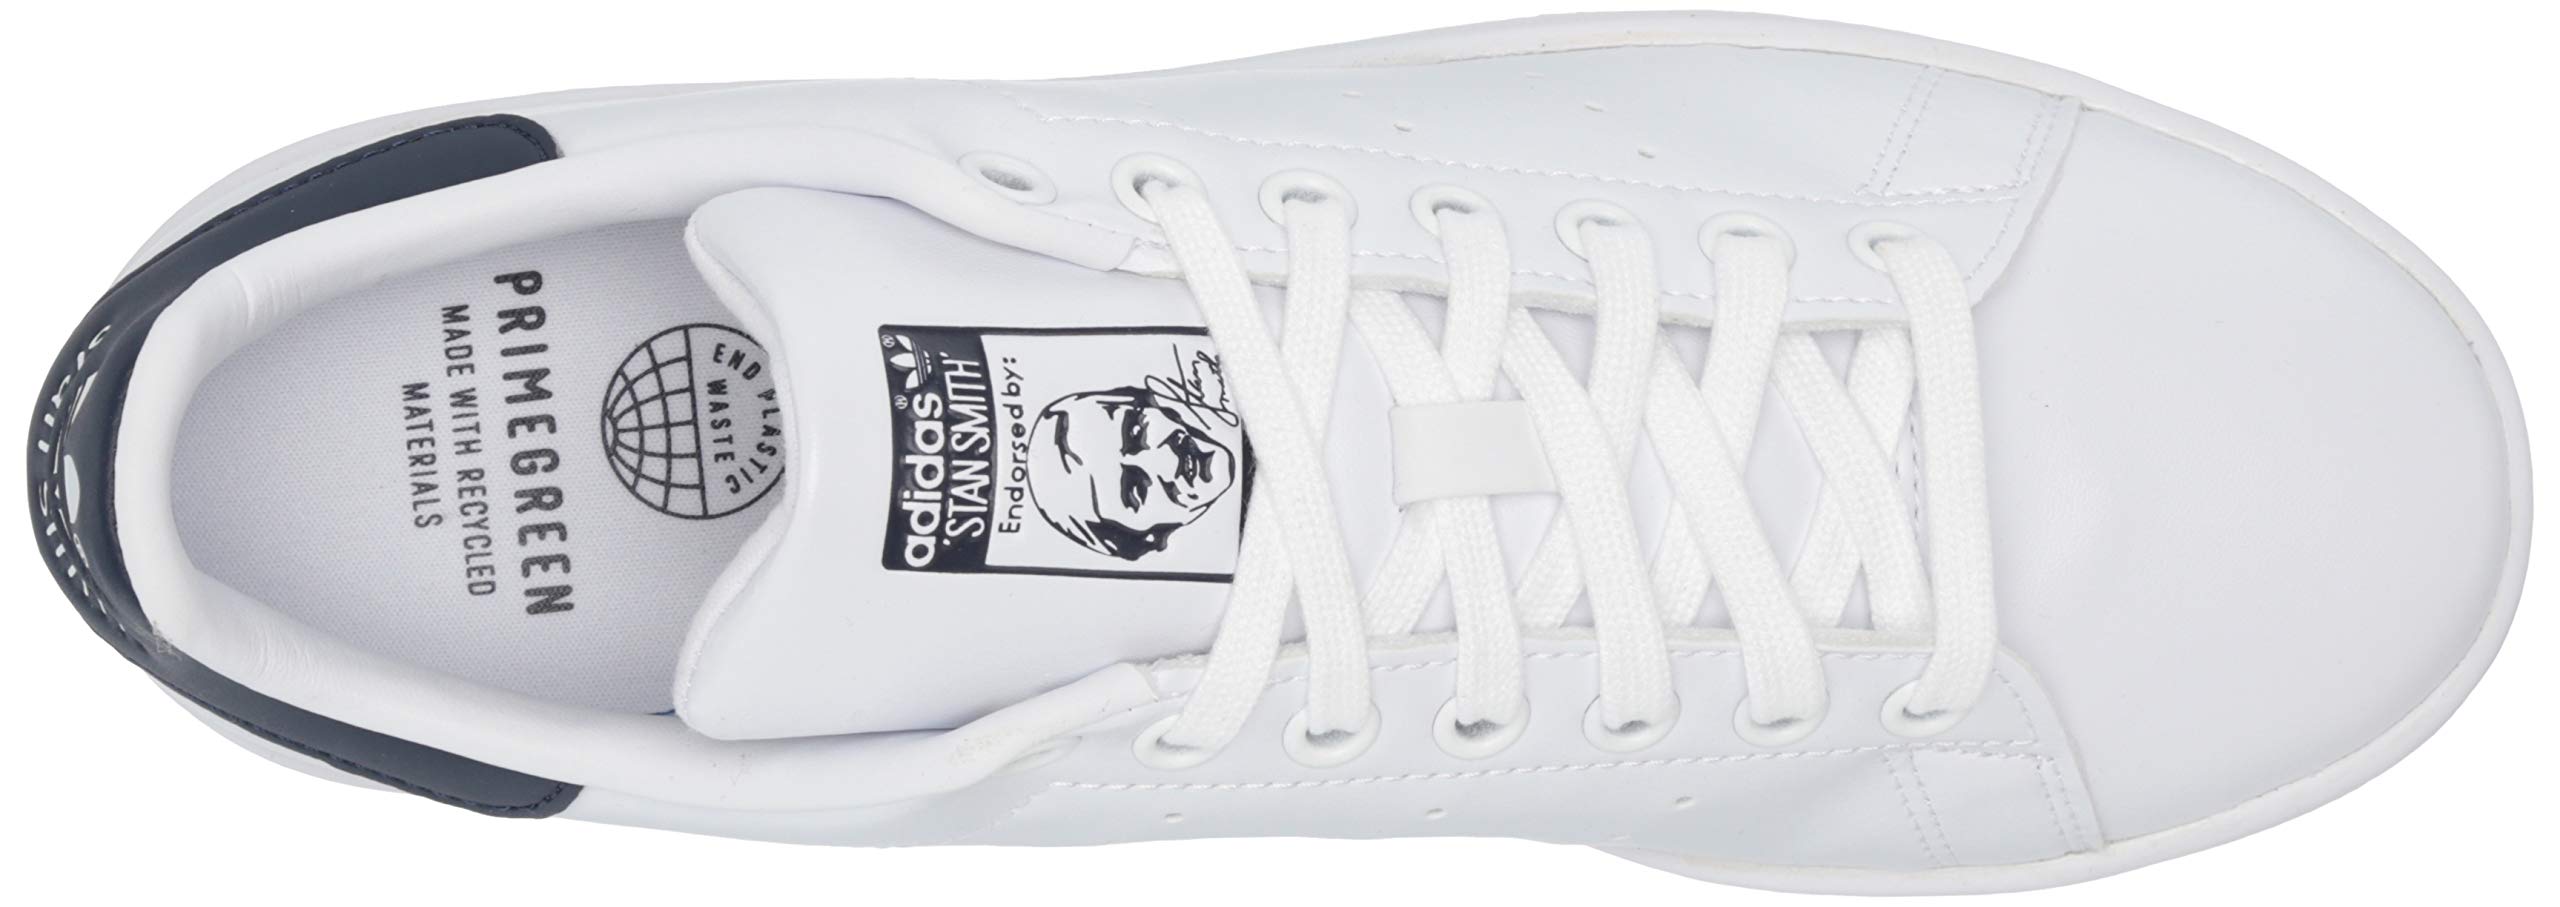 adidas Originals Men's Stan Smith (End Plastic Waste) Sneaker